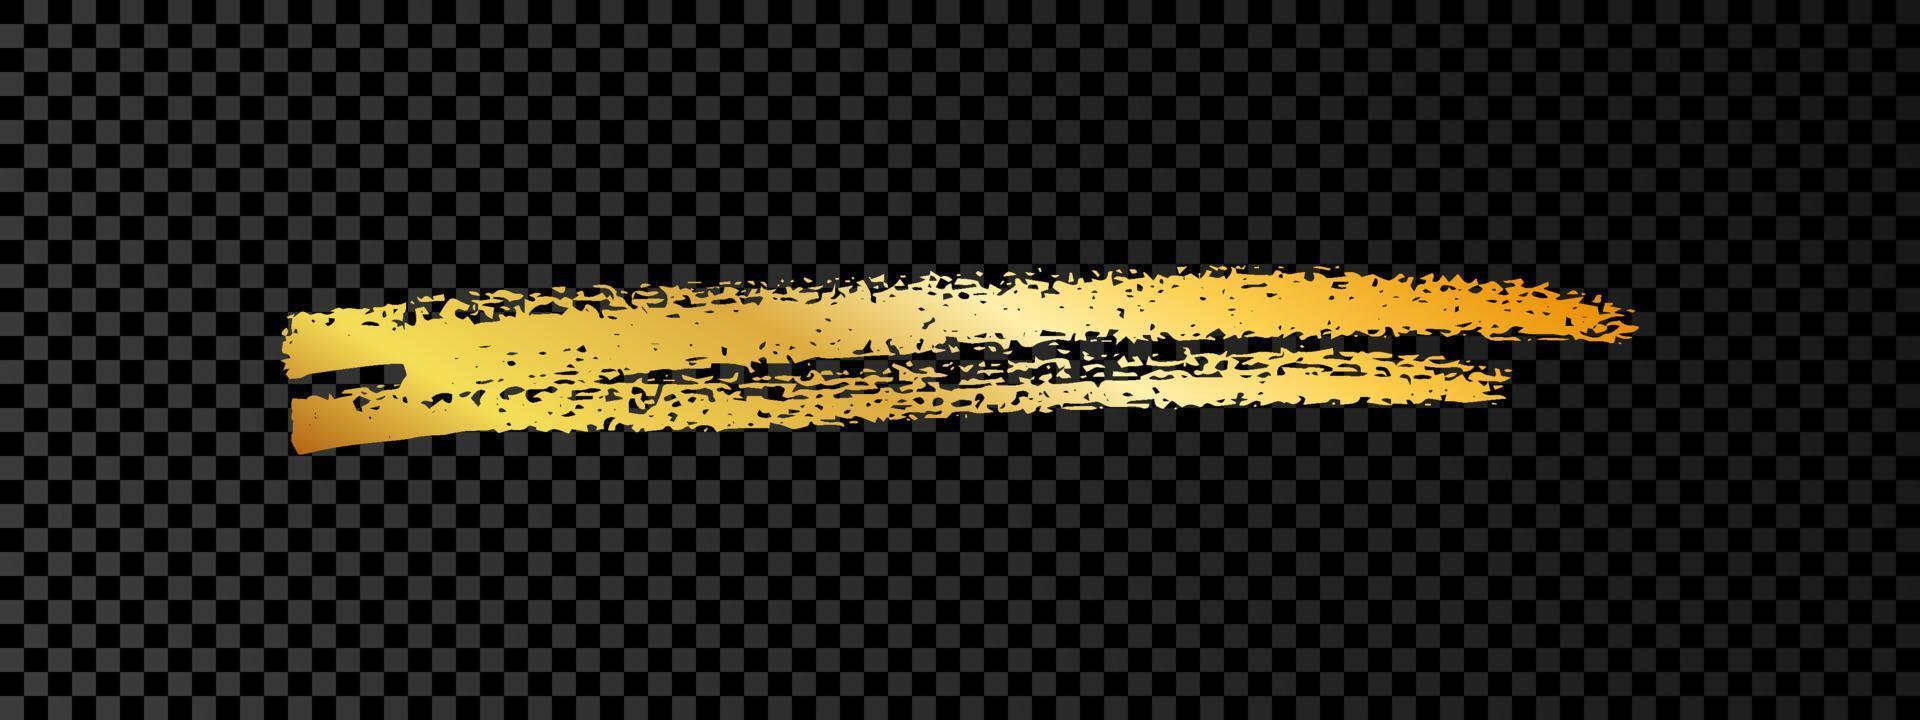 guld måla borsta smeta stroke. abstrakt guld glittrande skiss klottra smeta vektor